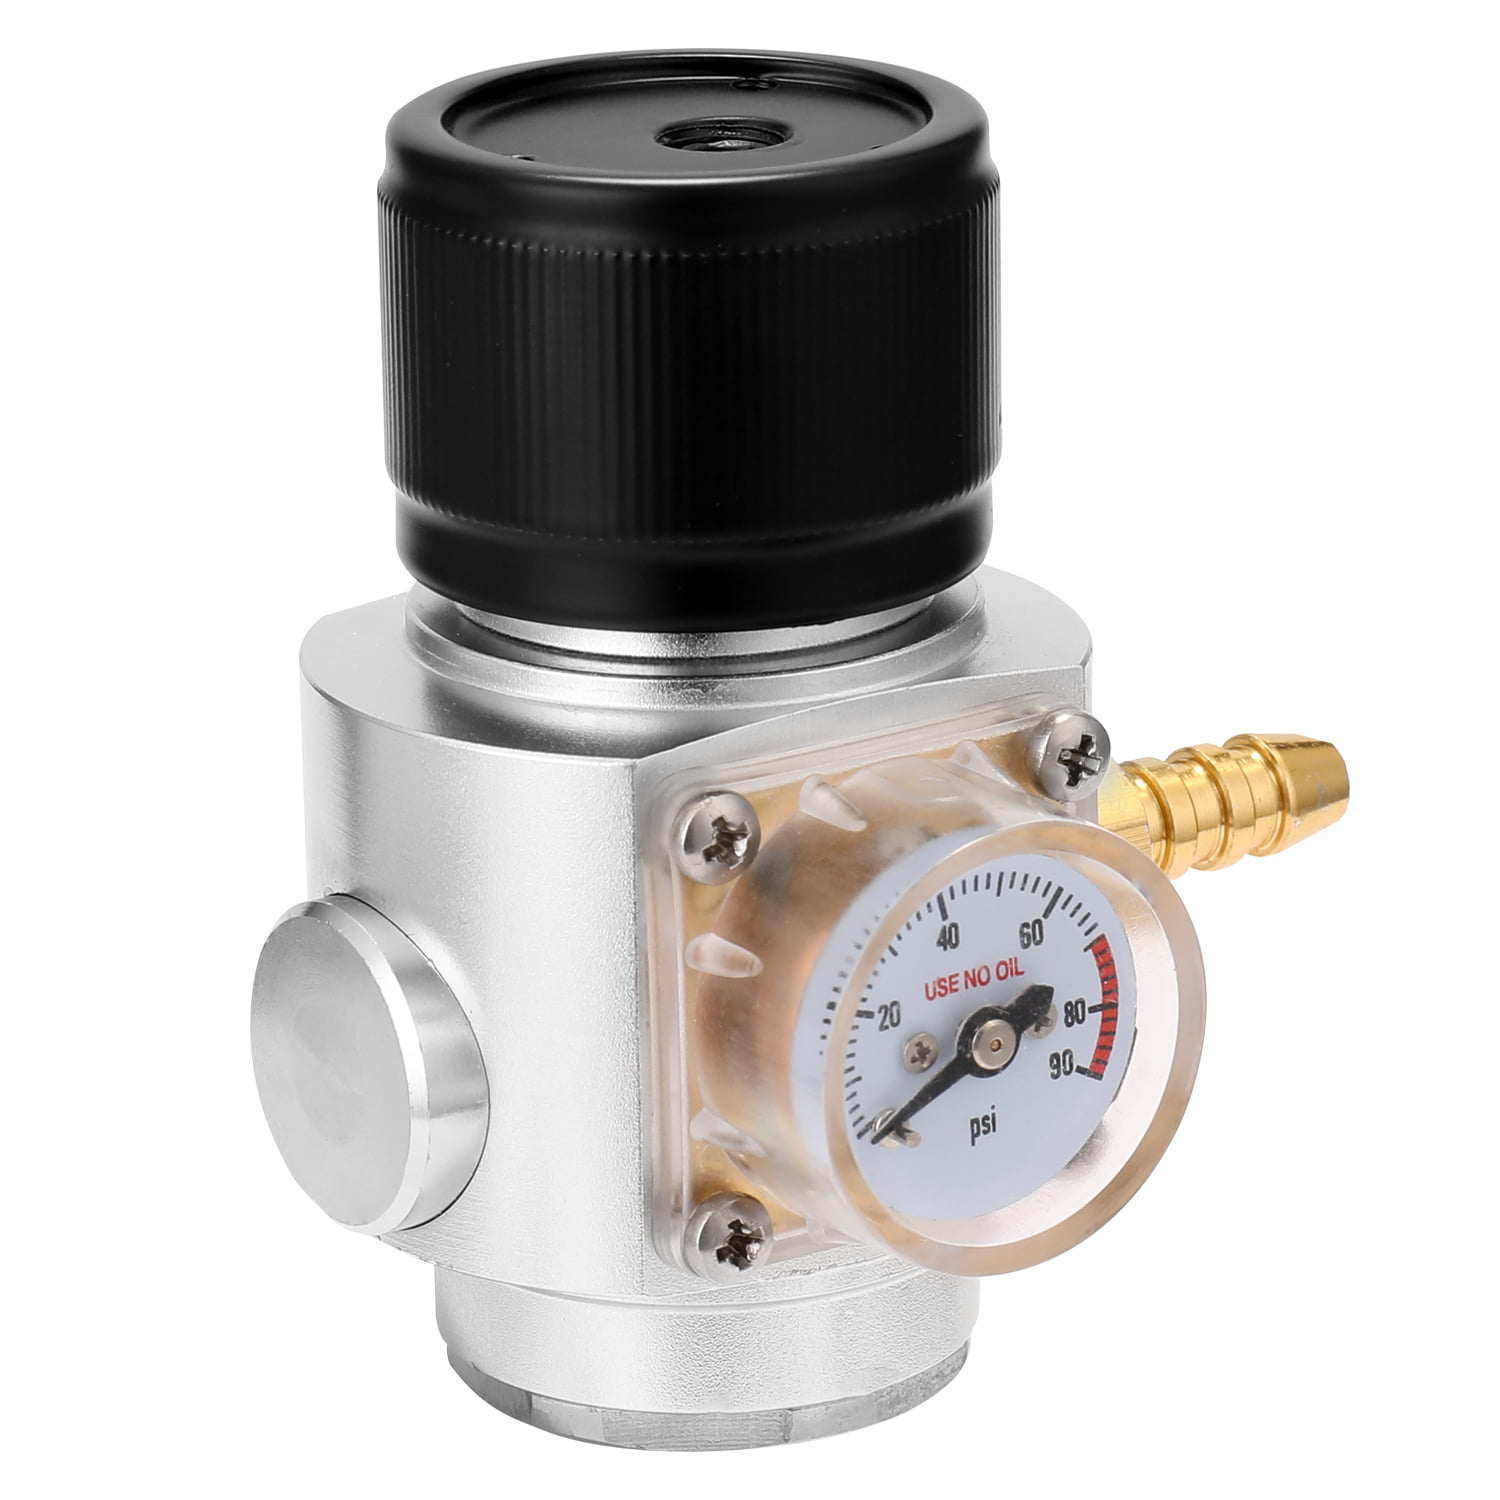 Janhiny Sodastream CO2 Mini Gas Ladegerät 0-90 PSI Manometer für Sodawasser Bier Kegerator